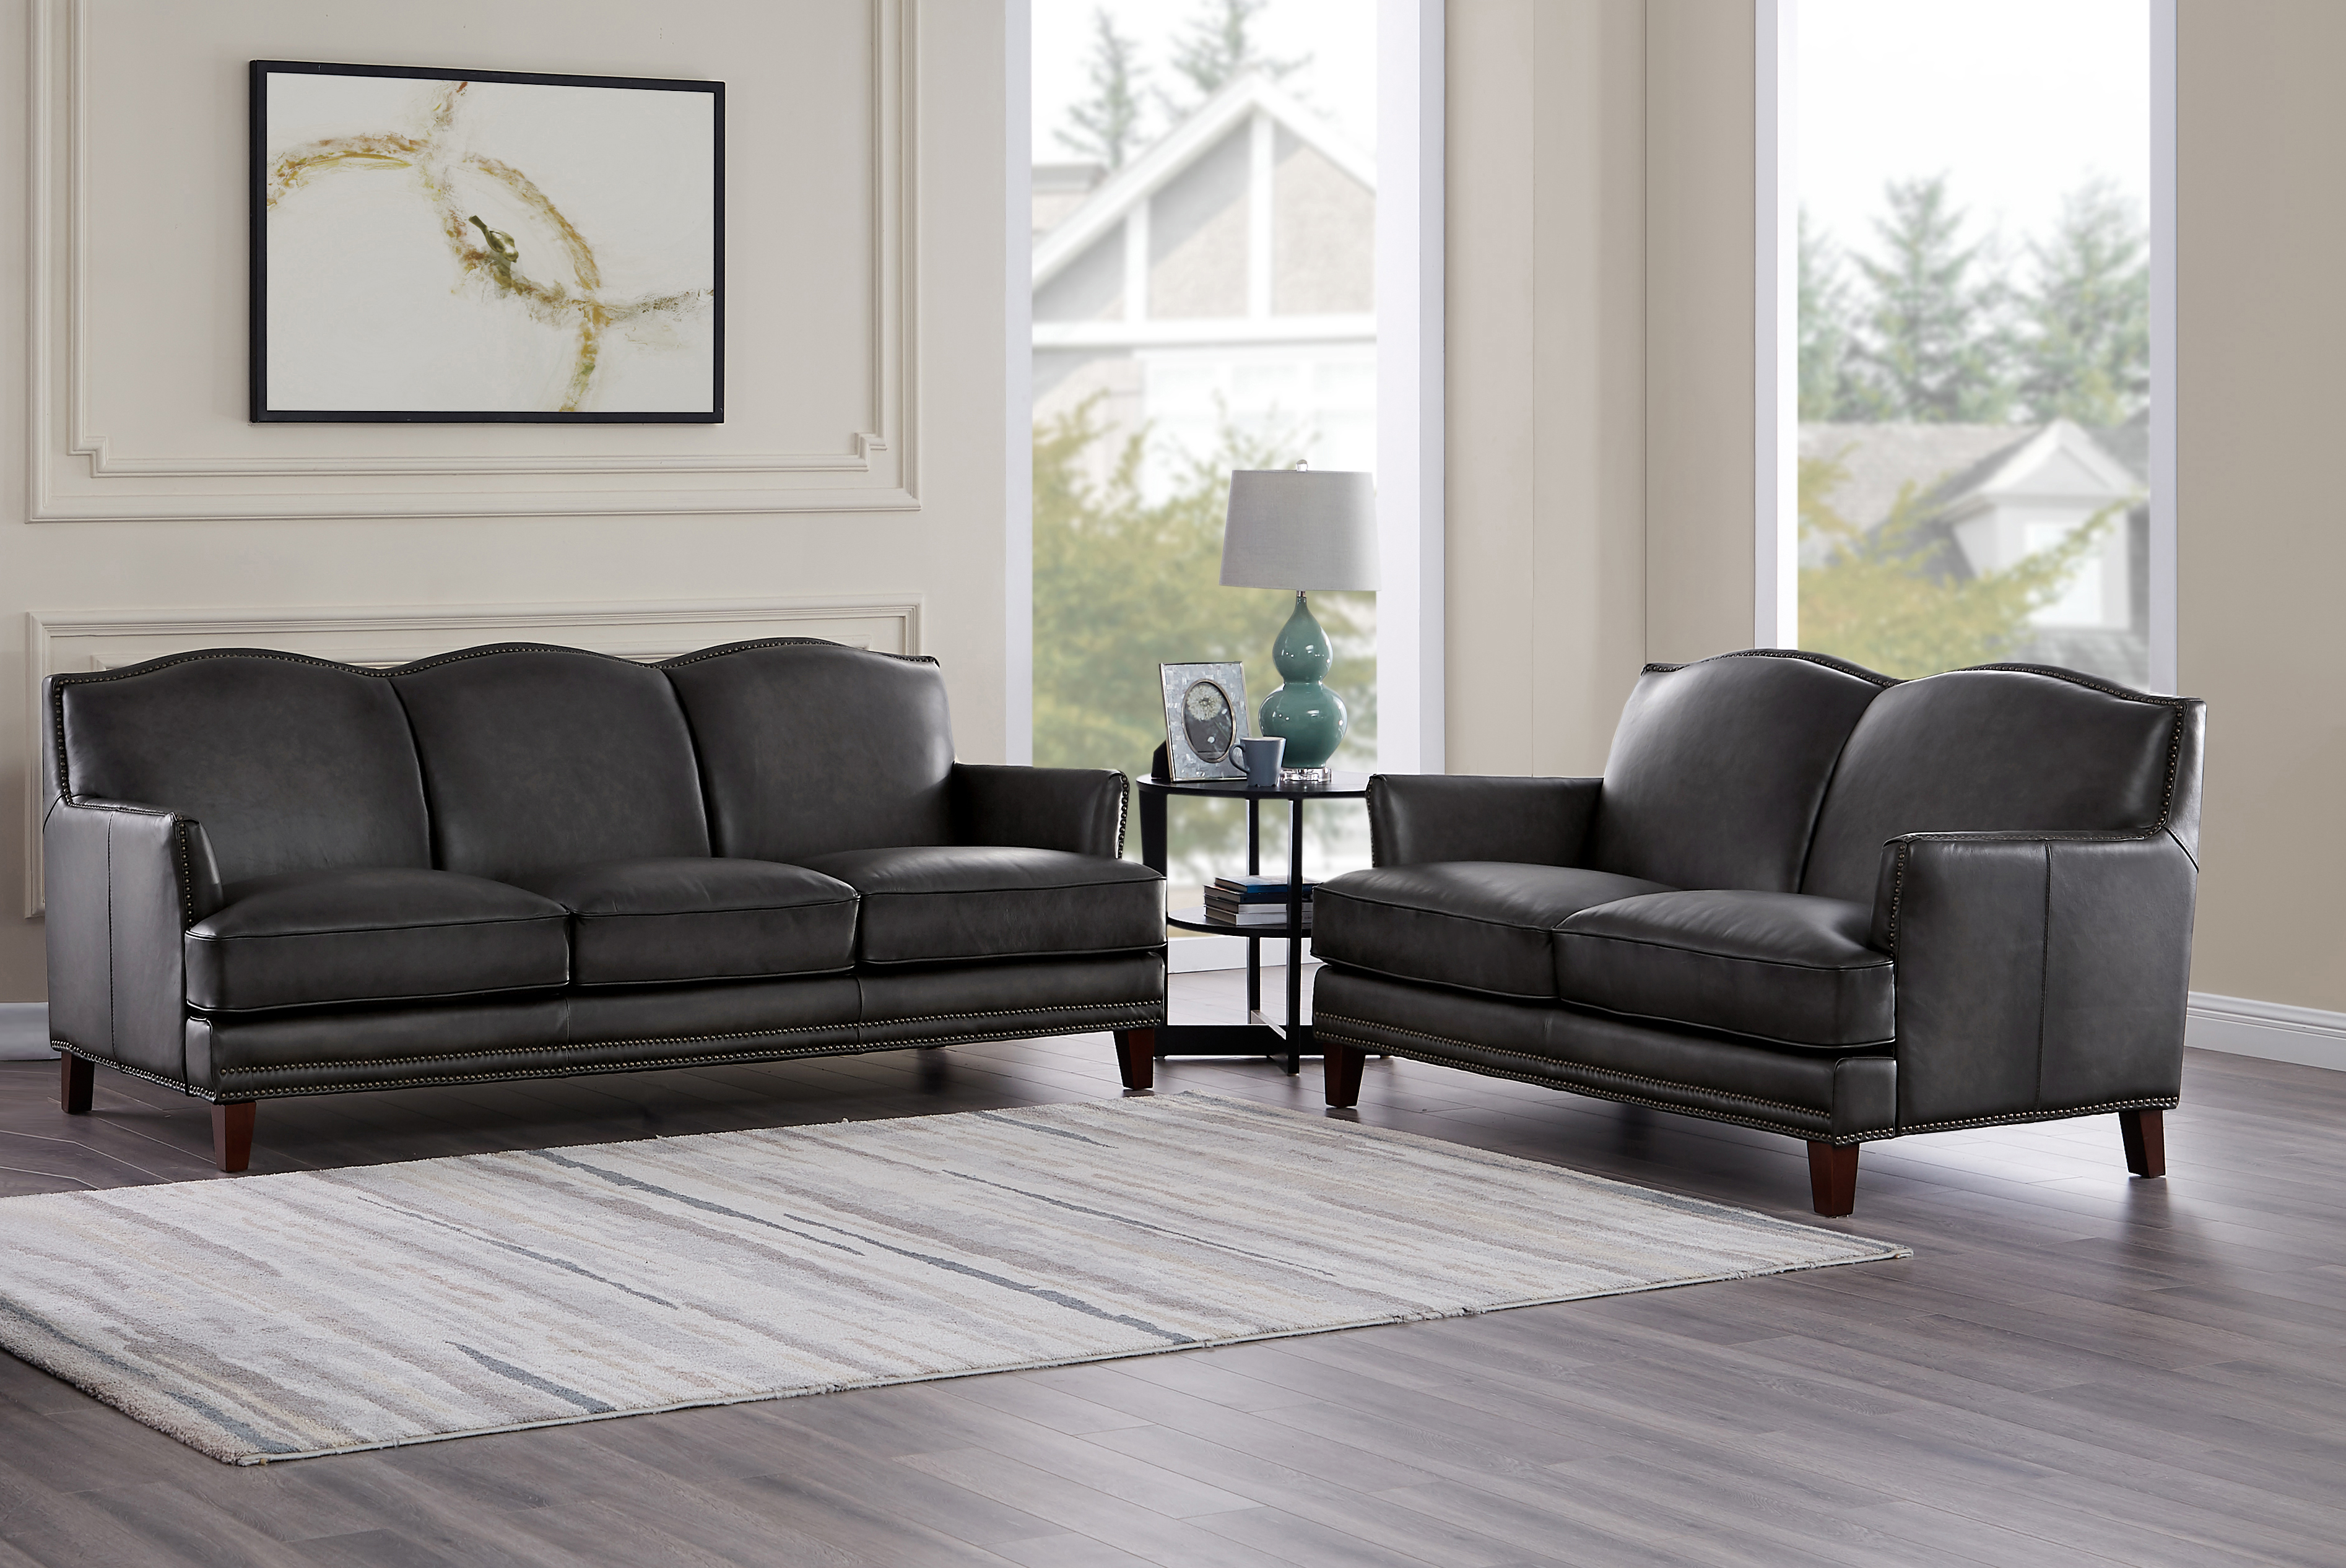 oliver & james metropolitan brown oxford leather sofa